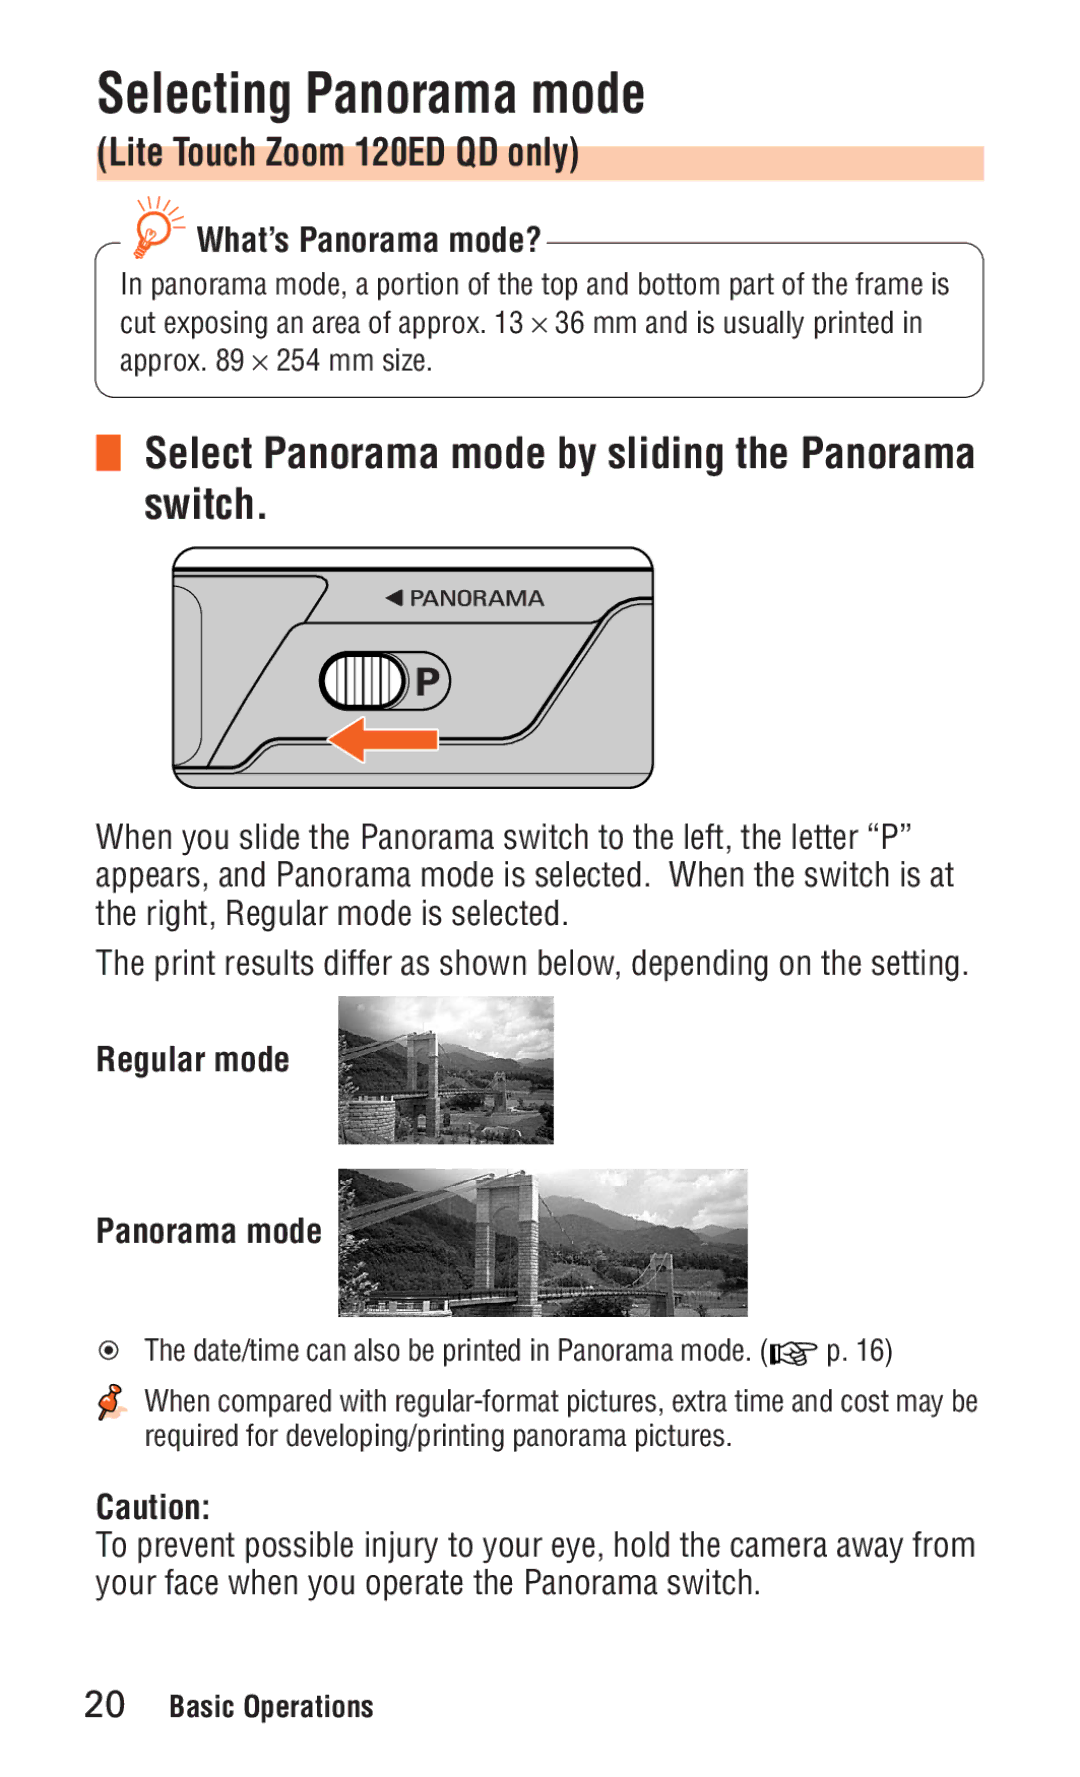 Nikon ED 120 Selecting Panorama mode, Select Panorama mode by sliding the Panorama switch, What’s Panorama mode? 